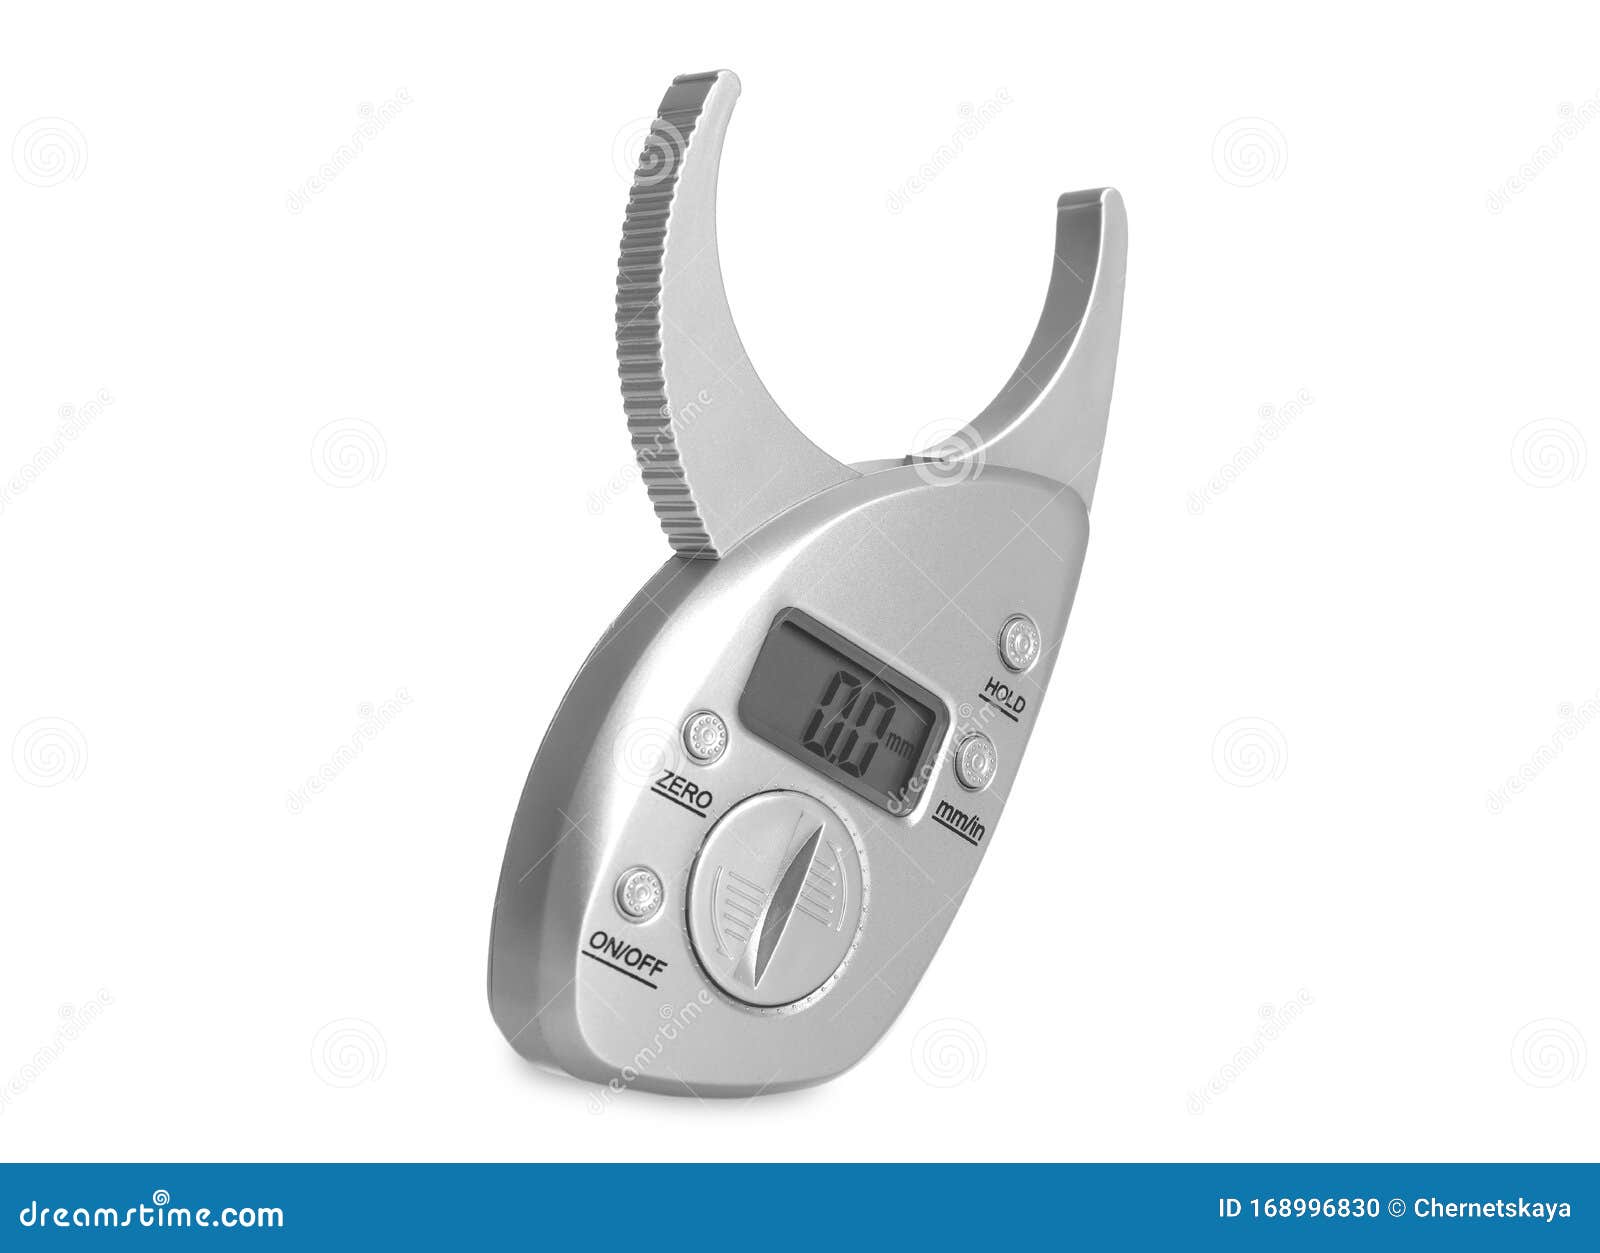 Healthcave Digital Electronic Body Fat Caliper Measurement Device